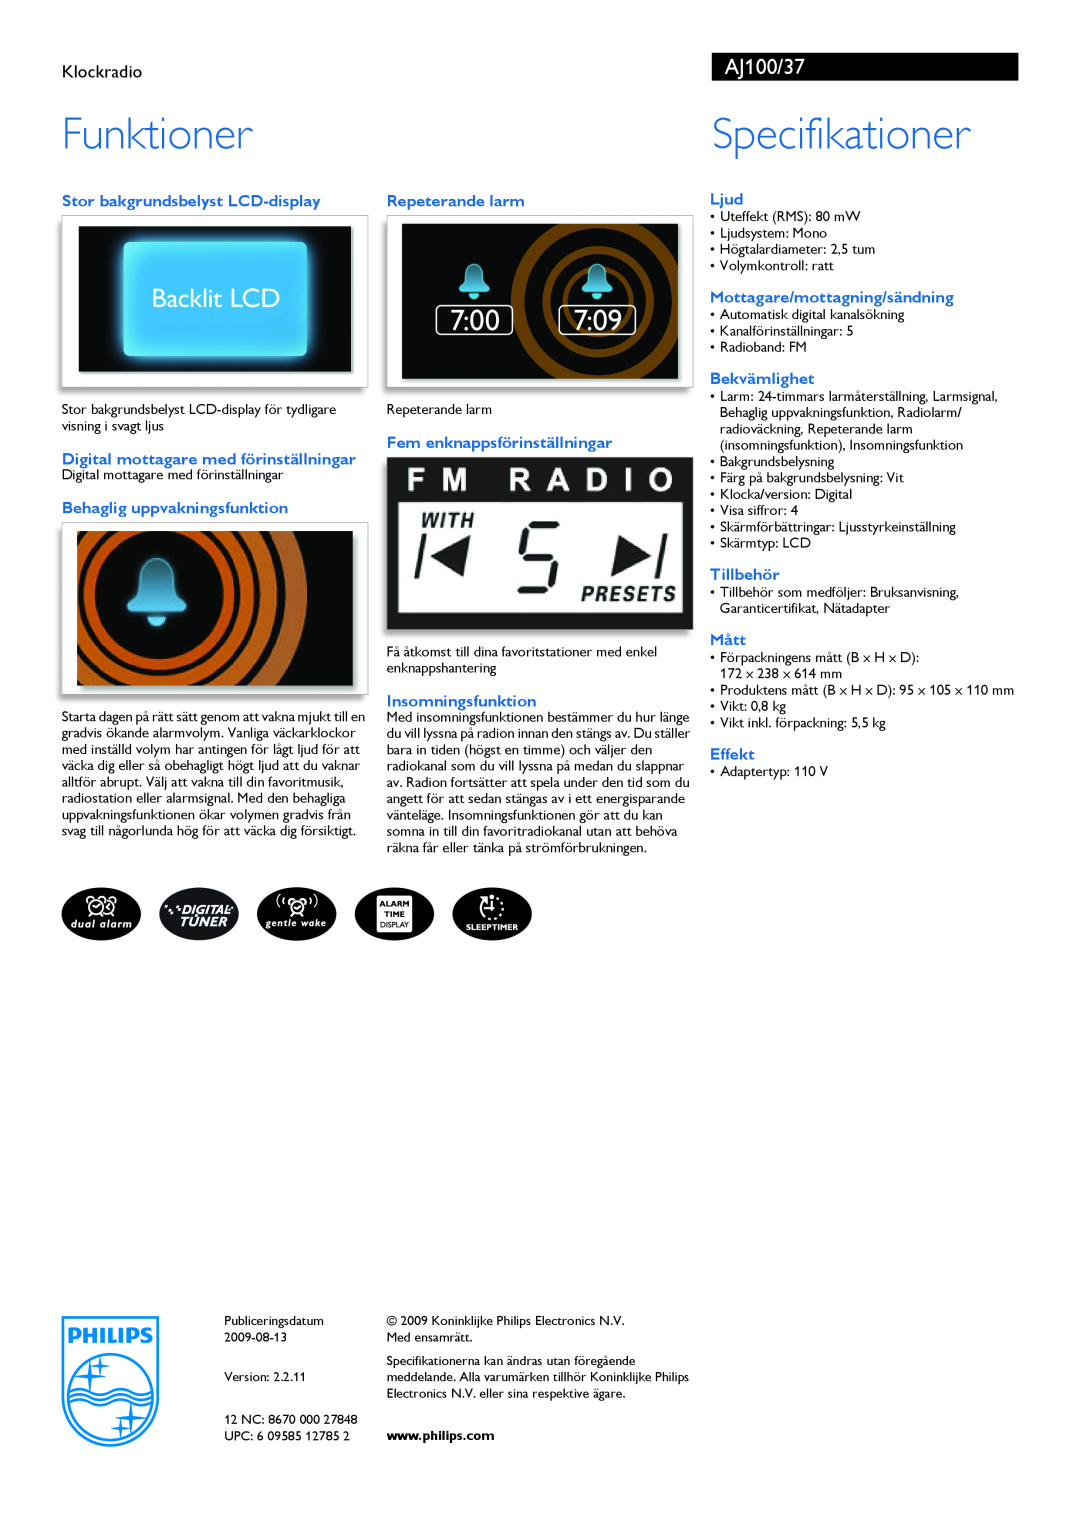 Philips manual AJ100/37, Funktioner, Specifikationer, Klockradio 